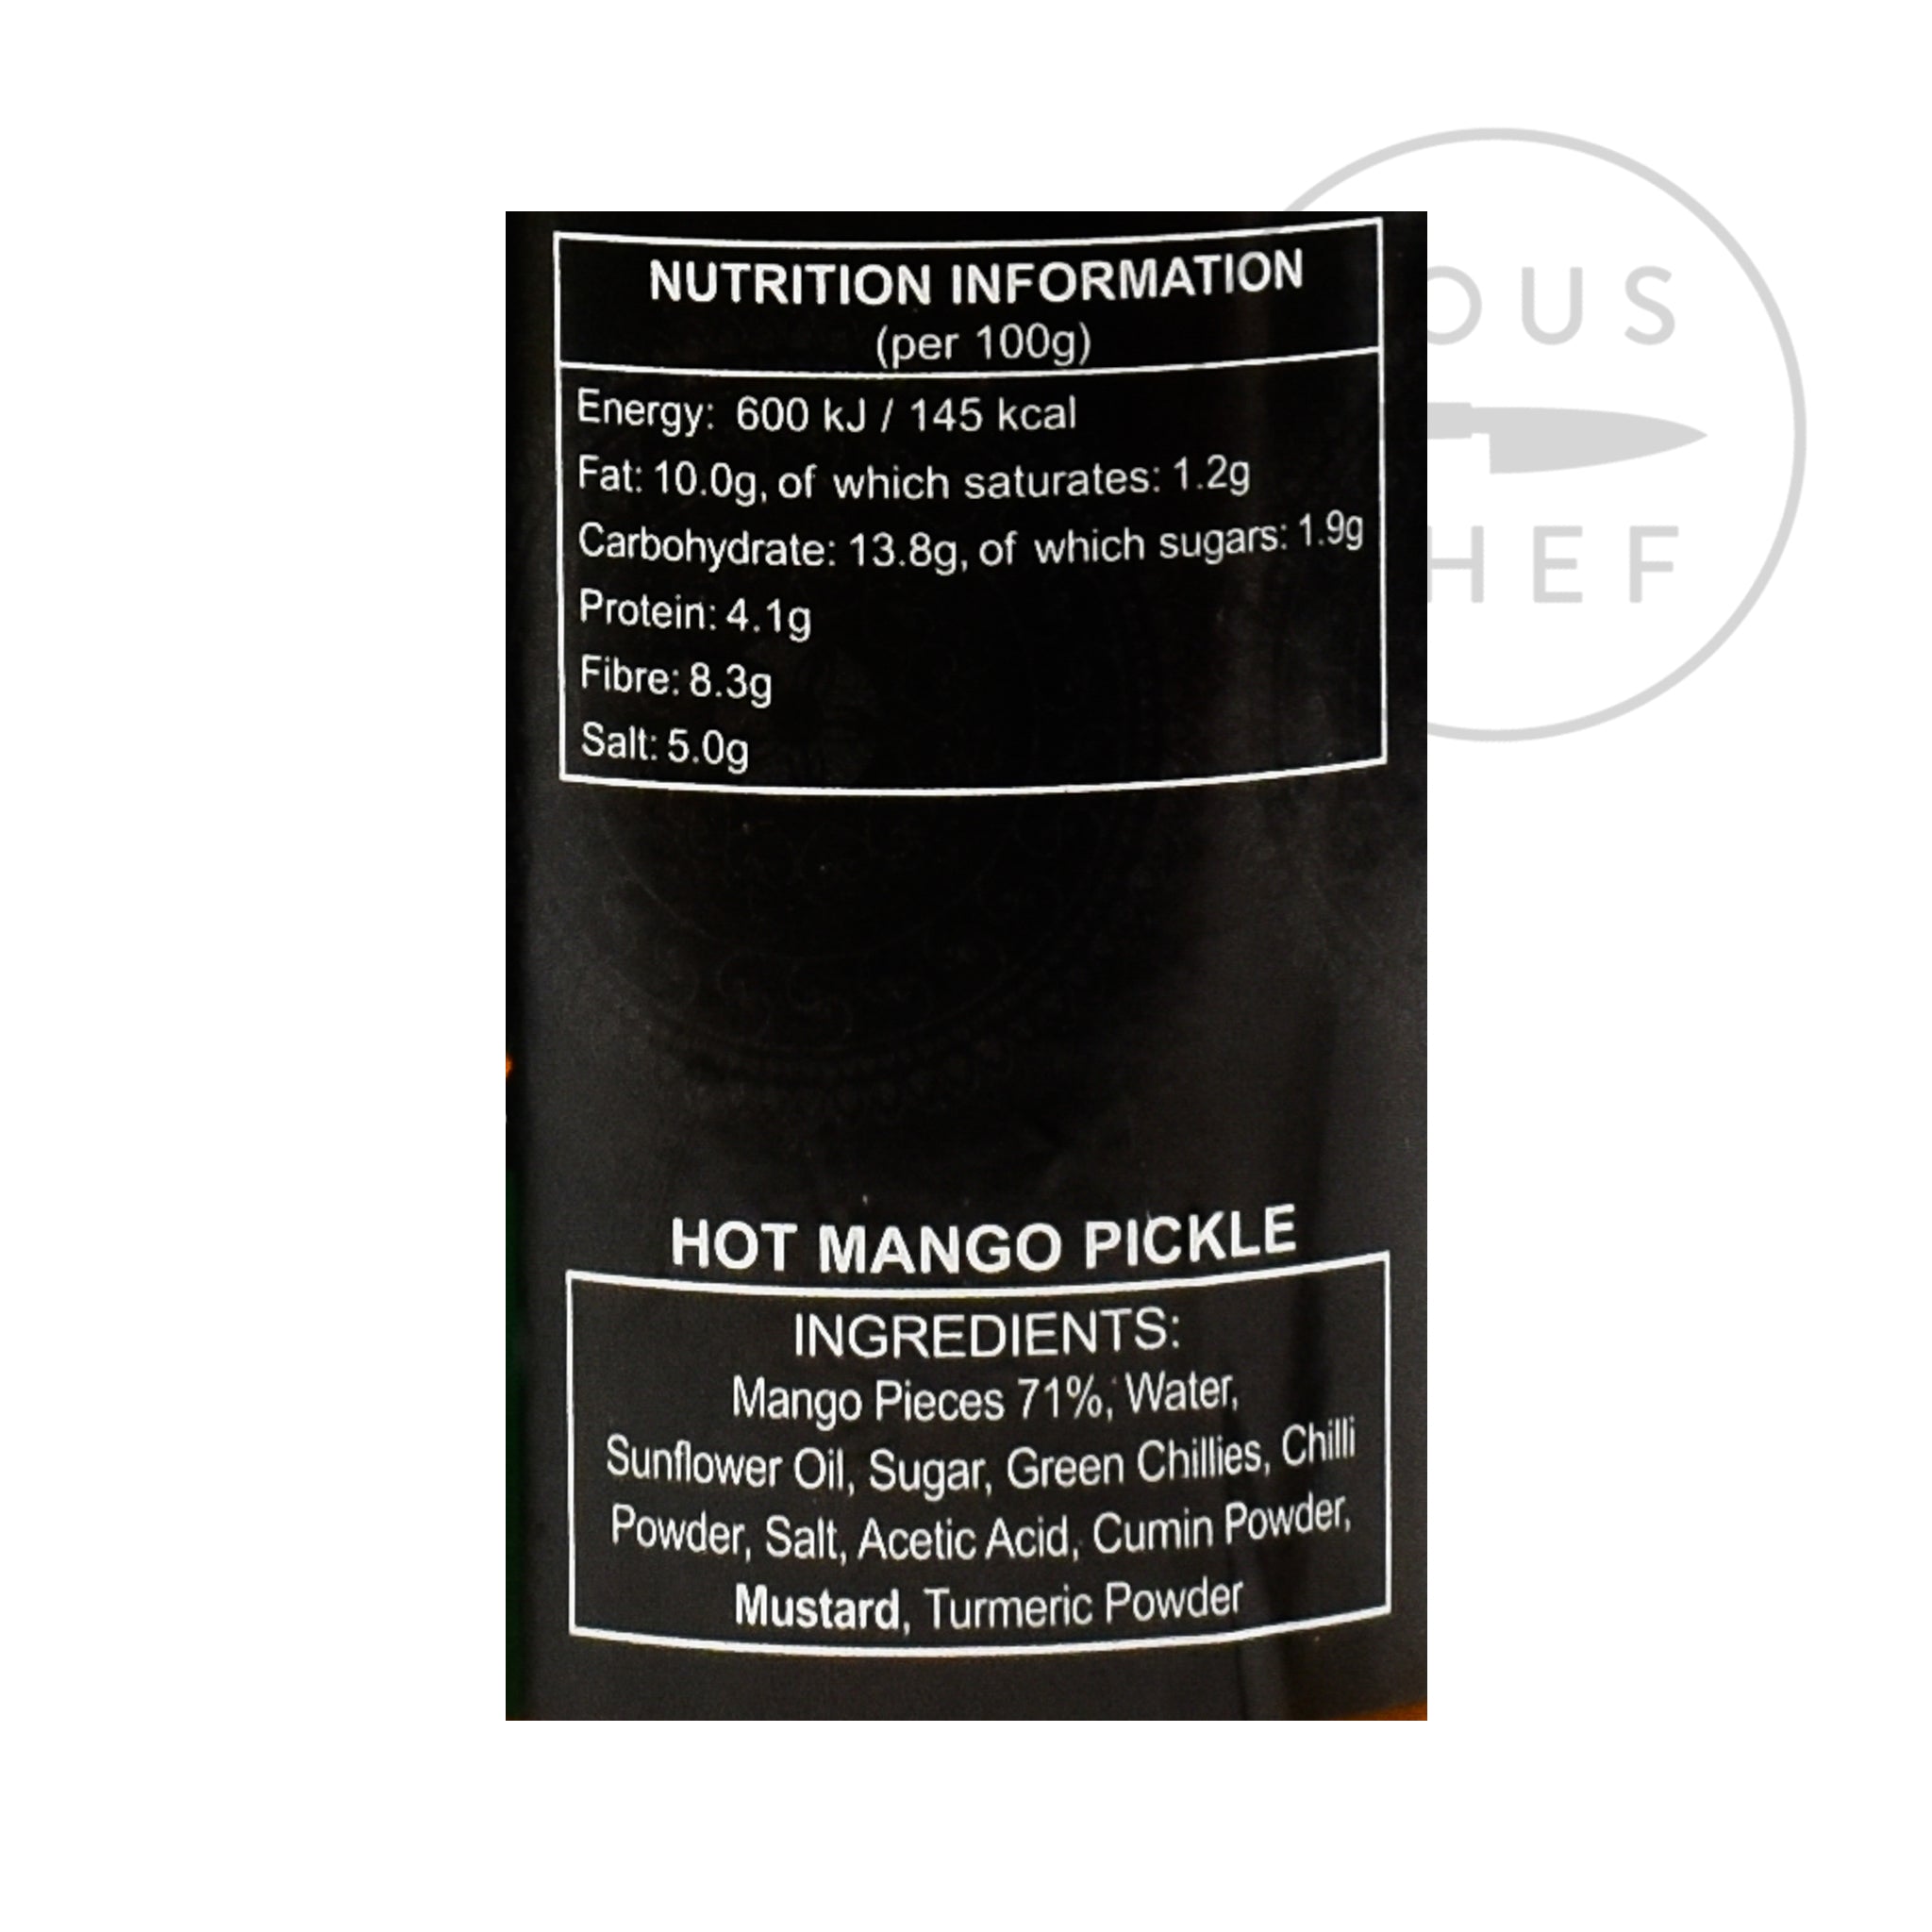 Ferns' Hot Mango Pickle 380g nutritional information ingredients